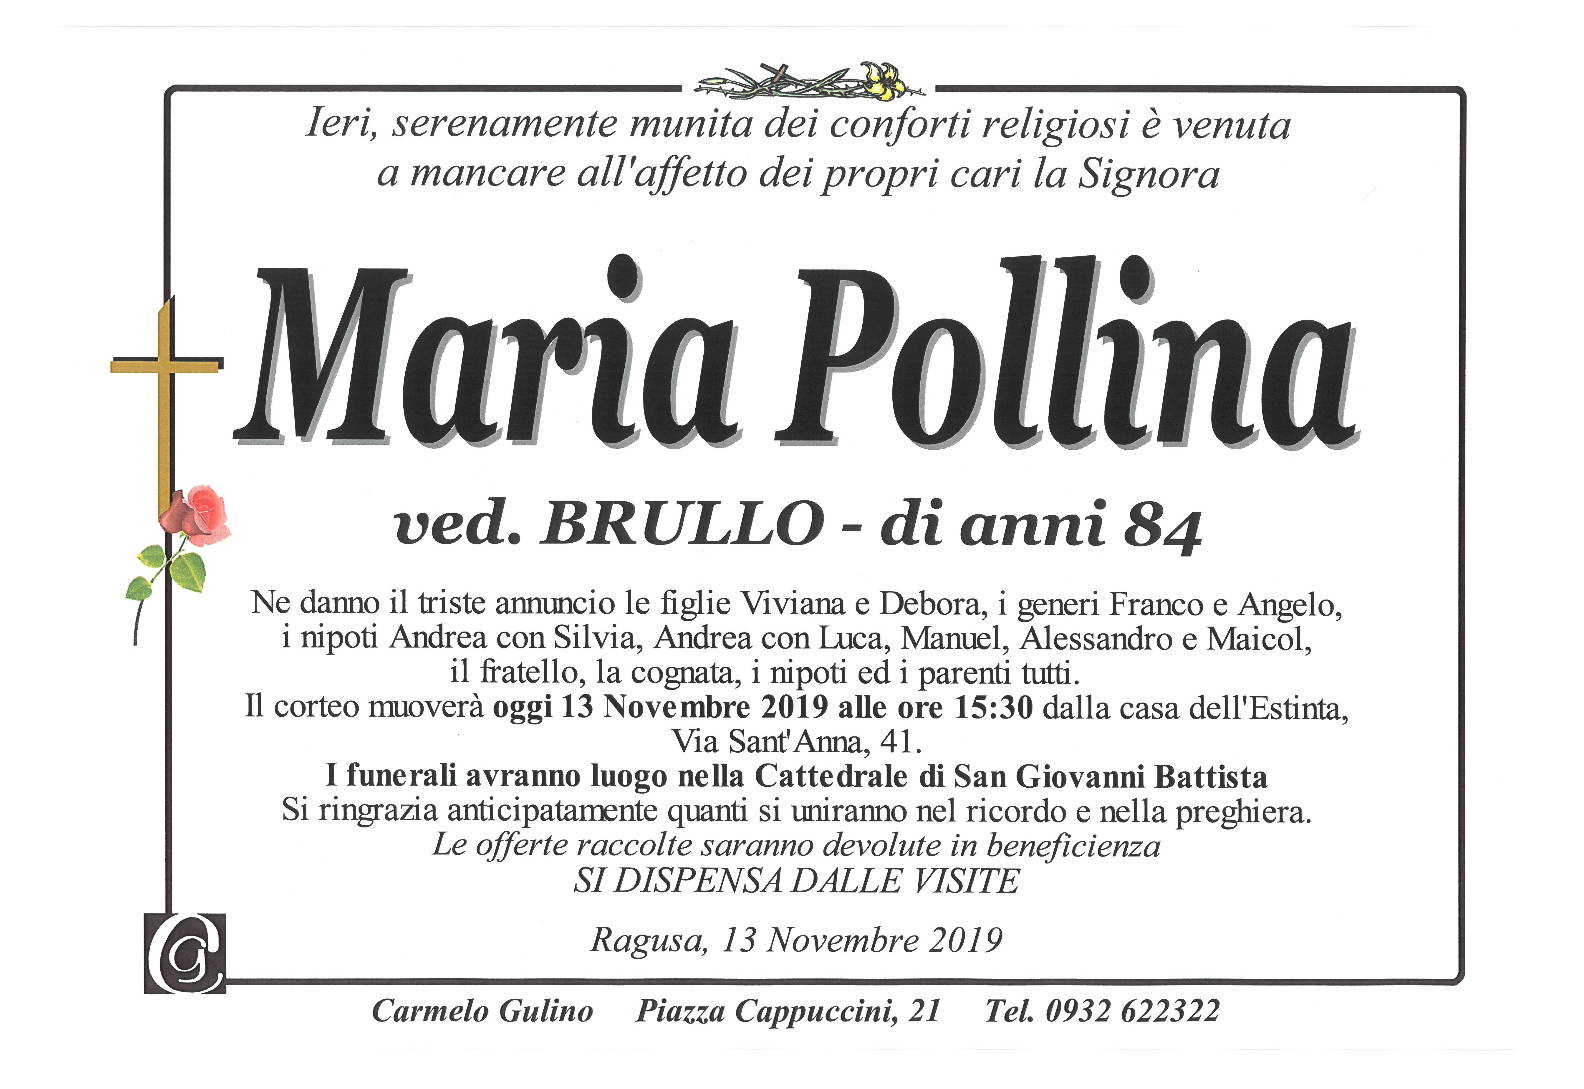 Maria Pollina